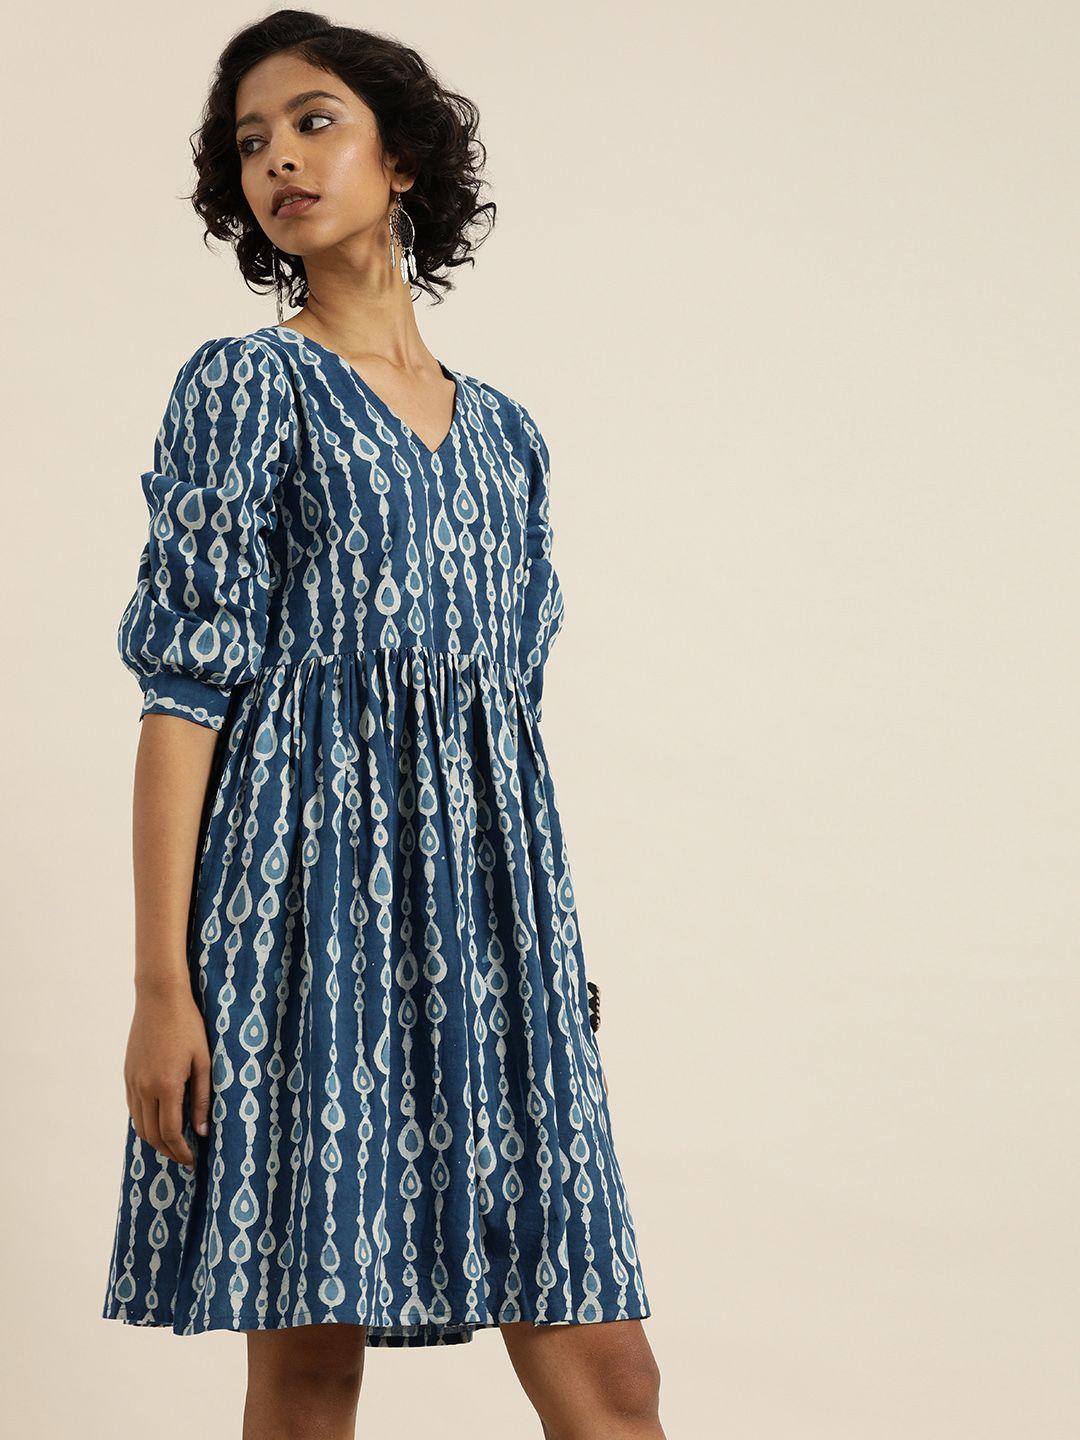 taavi blue & white indigo hand block print empire sustainable pure cotton ethnic dress with gathered detail